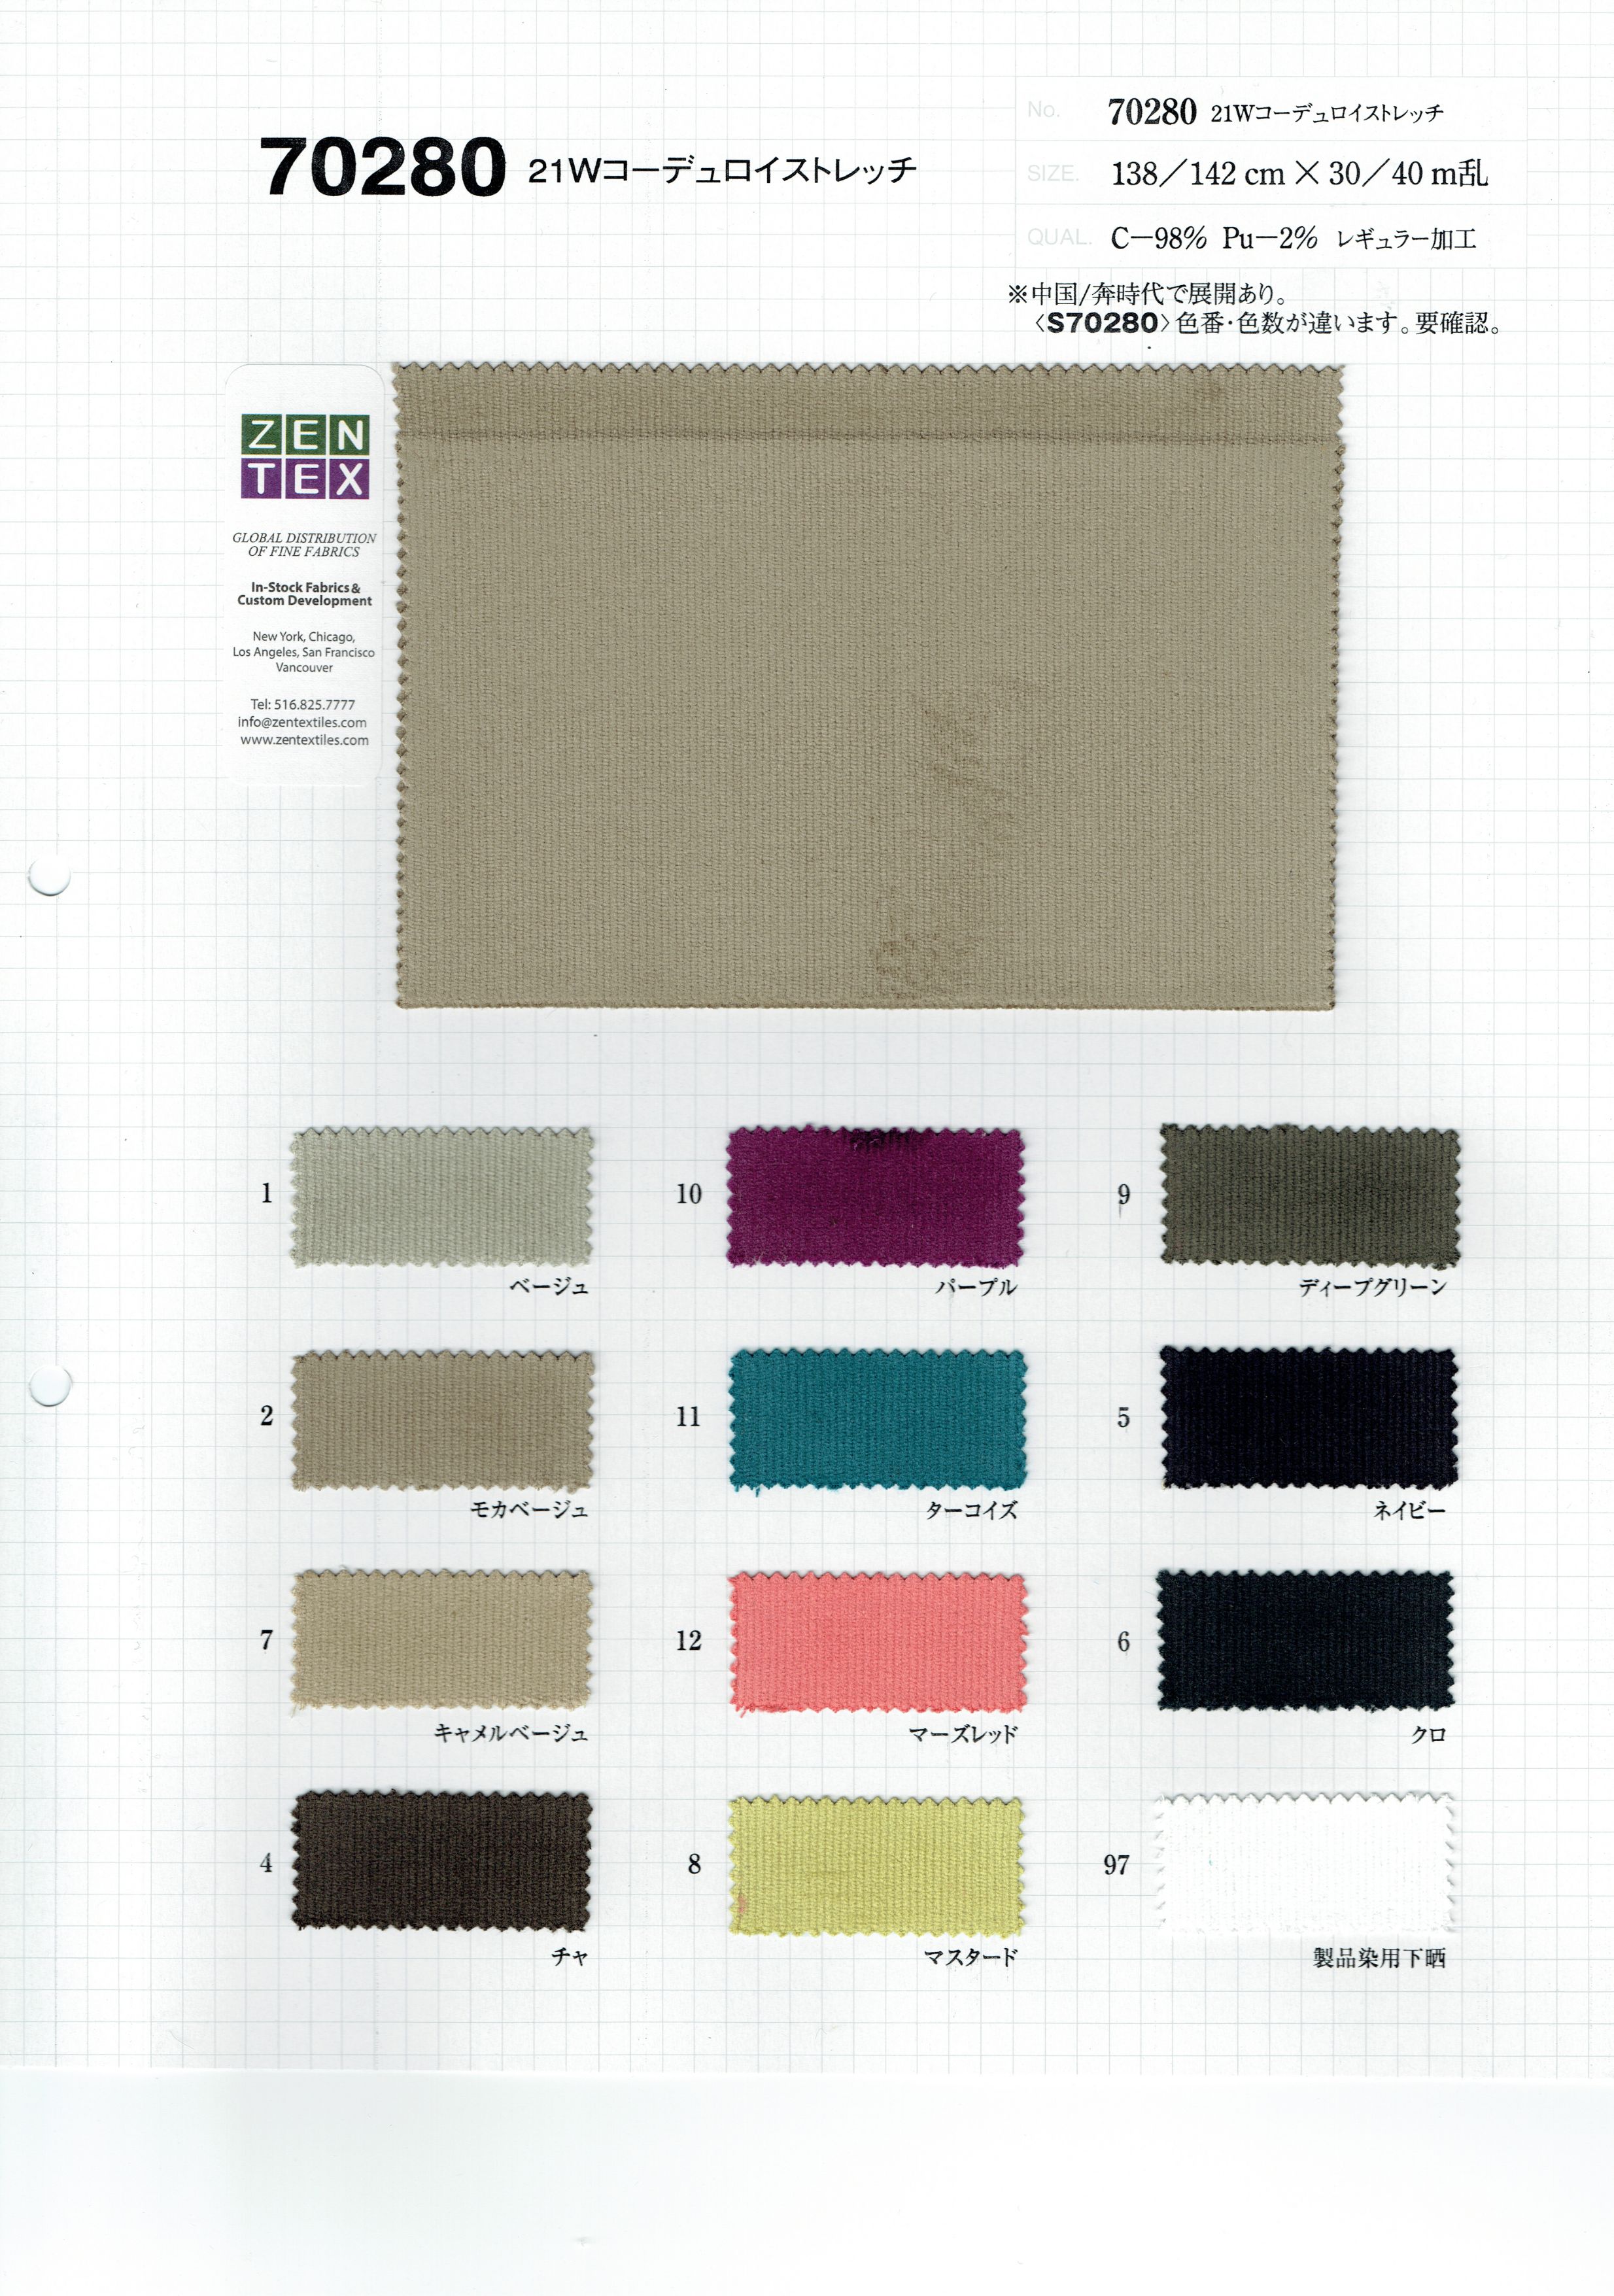 Z E N T E X - High Quality Fabrics From Japan & Asia, Stock Service, 1 Roll  Minimums, Custom Development